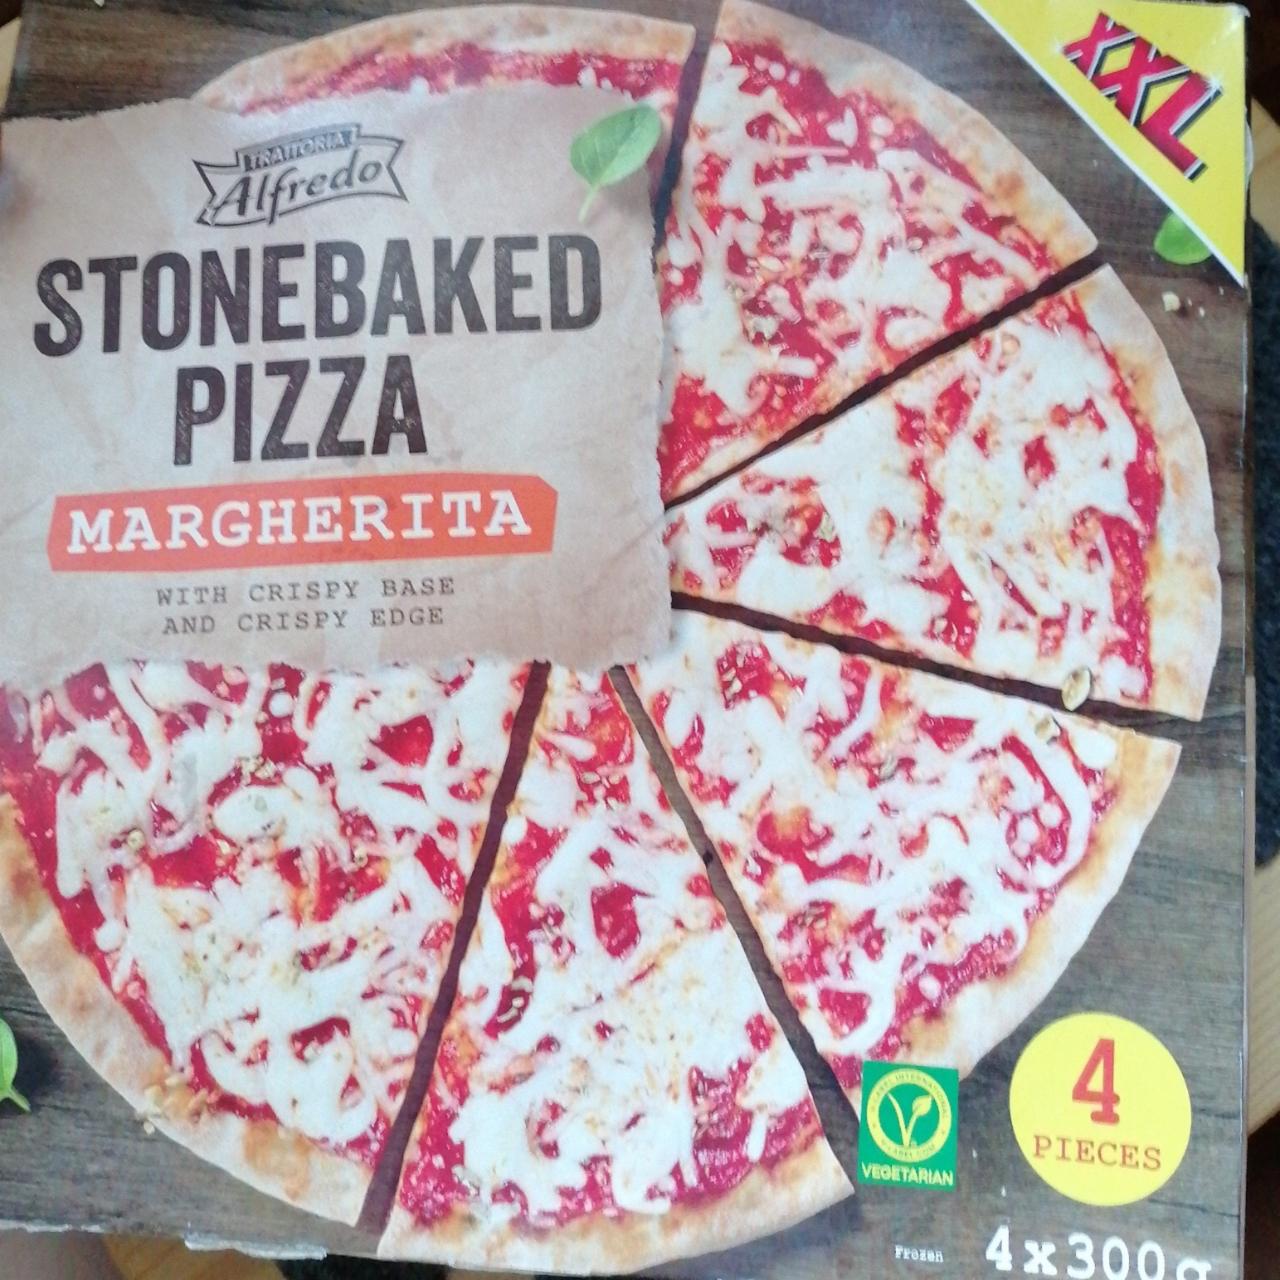 Képek - Stonebaked Pizza Margherita with crispy base and crispy edge Trattoria Alfredo